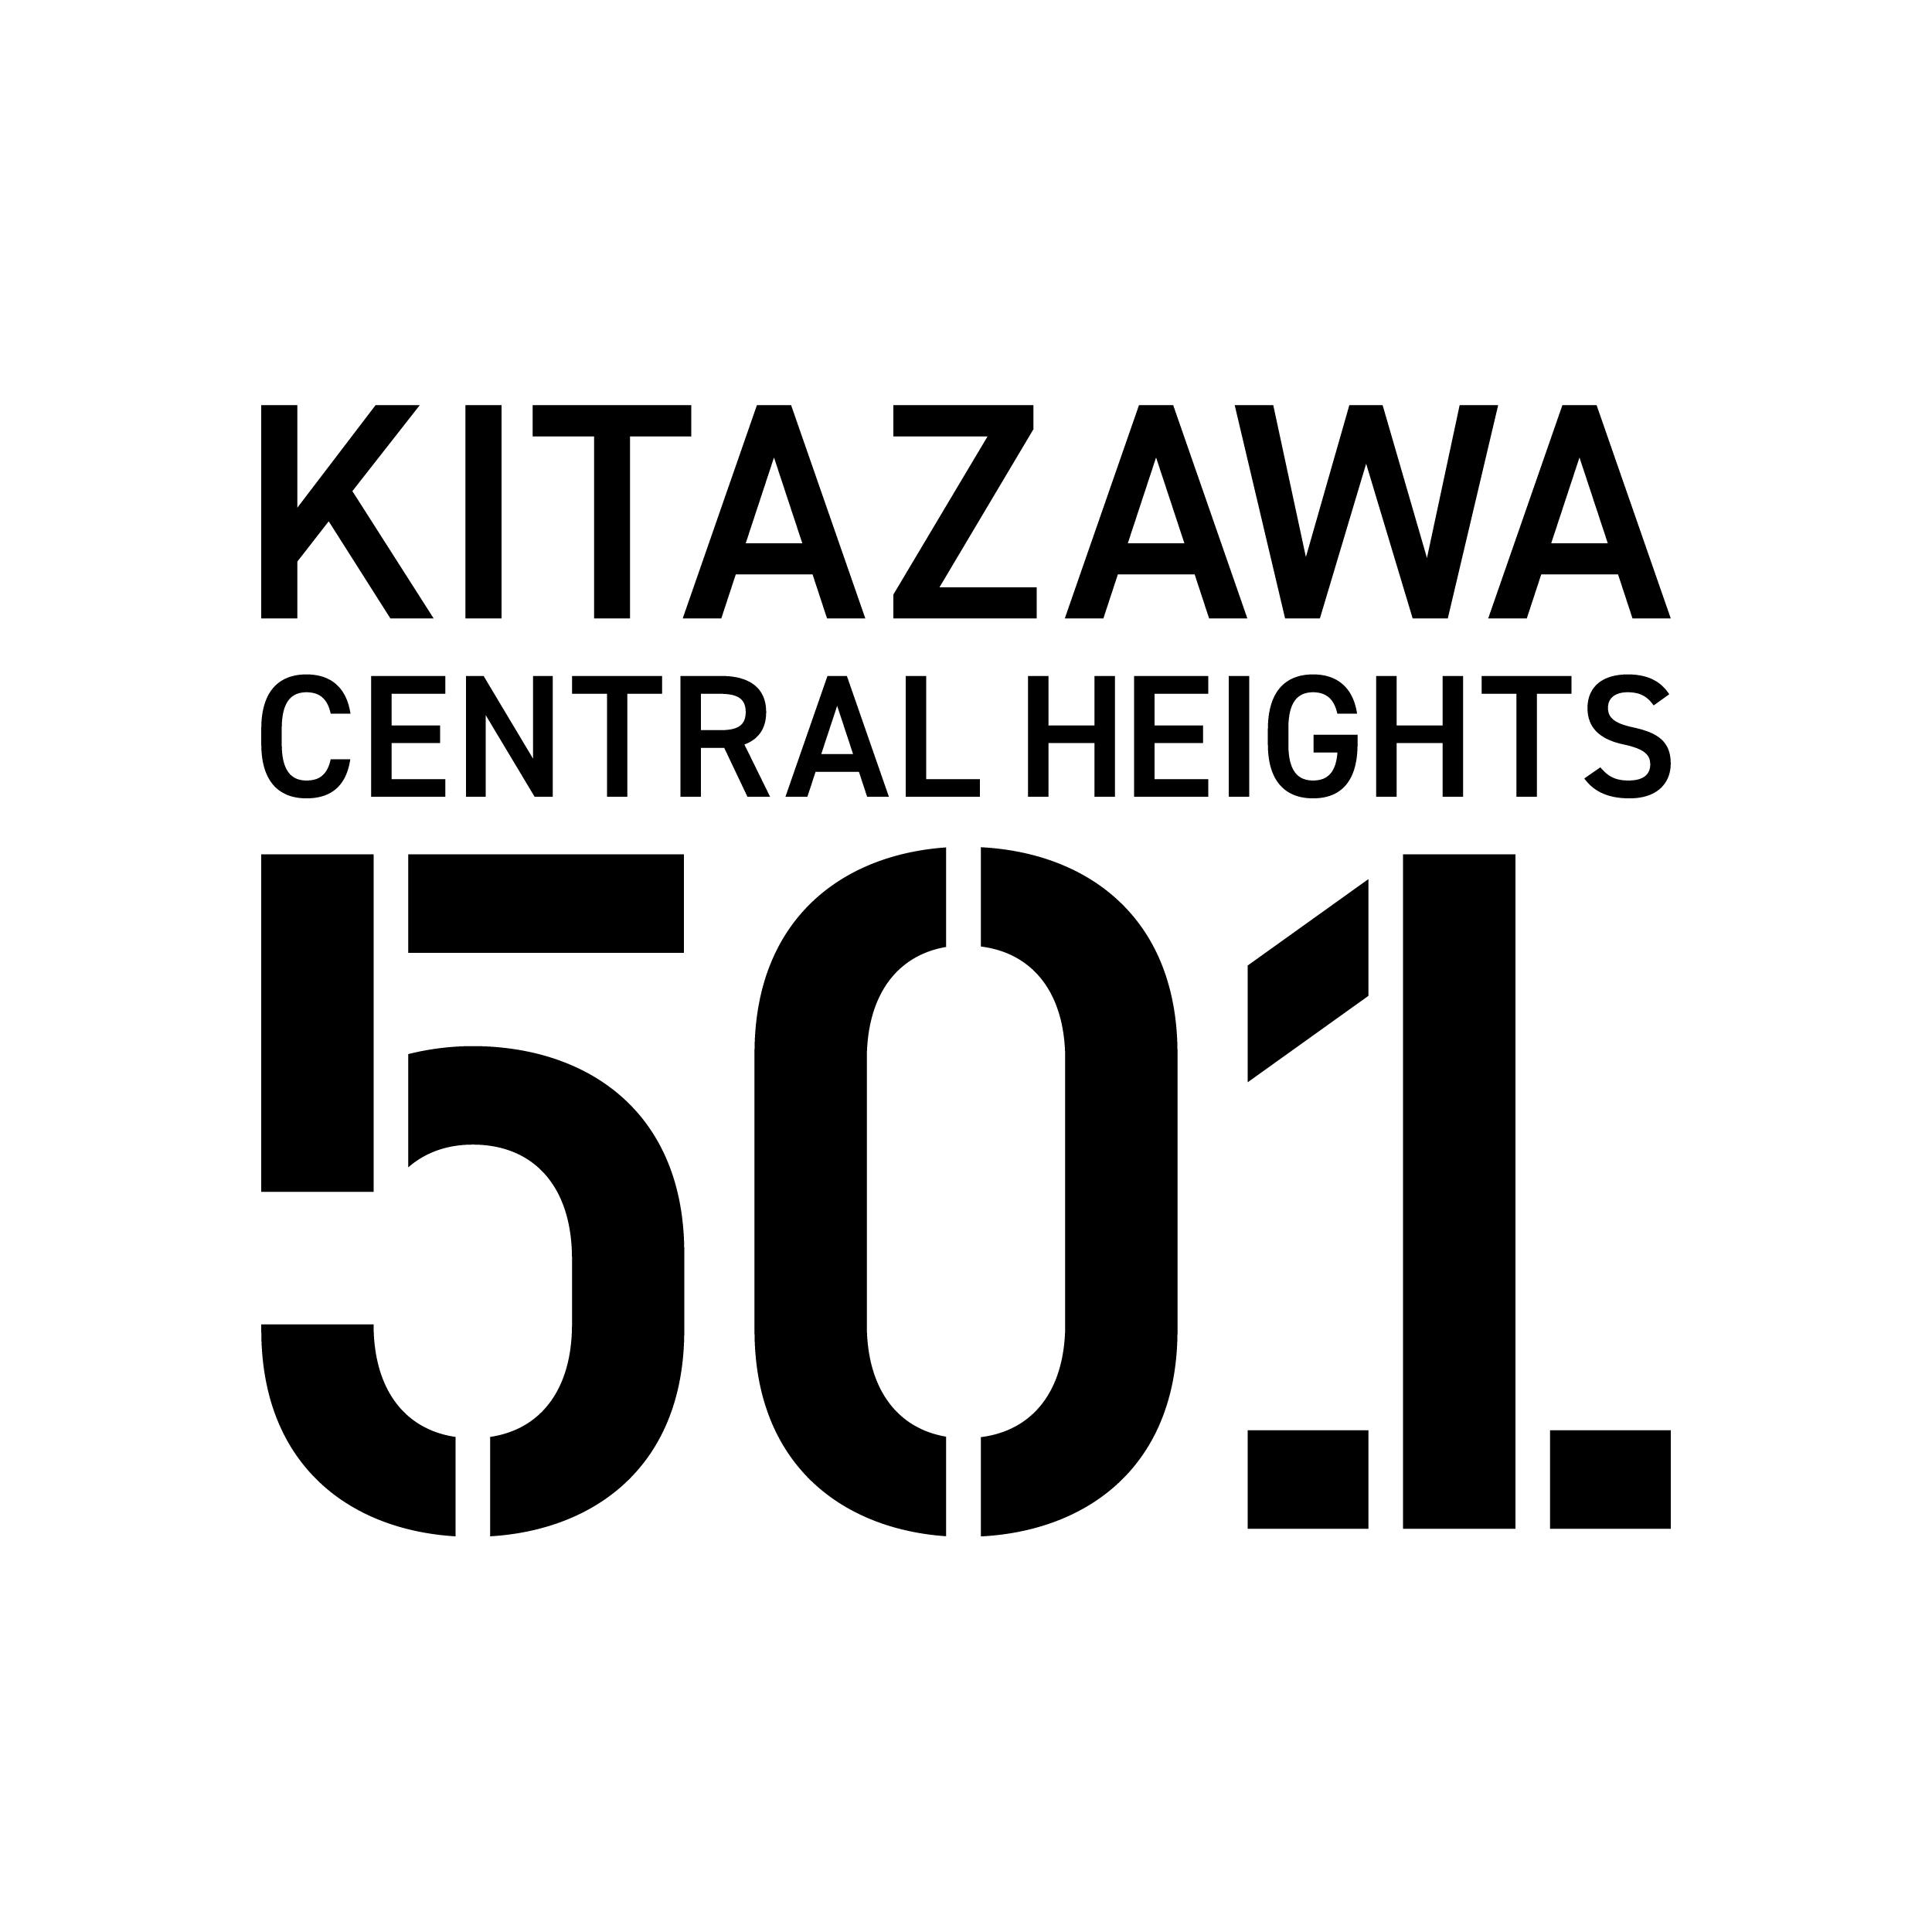 KITAZAWA CENTRAL HEIGHTS 501